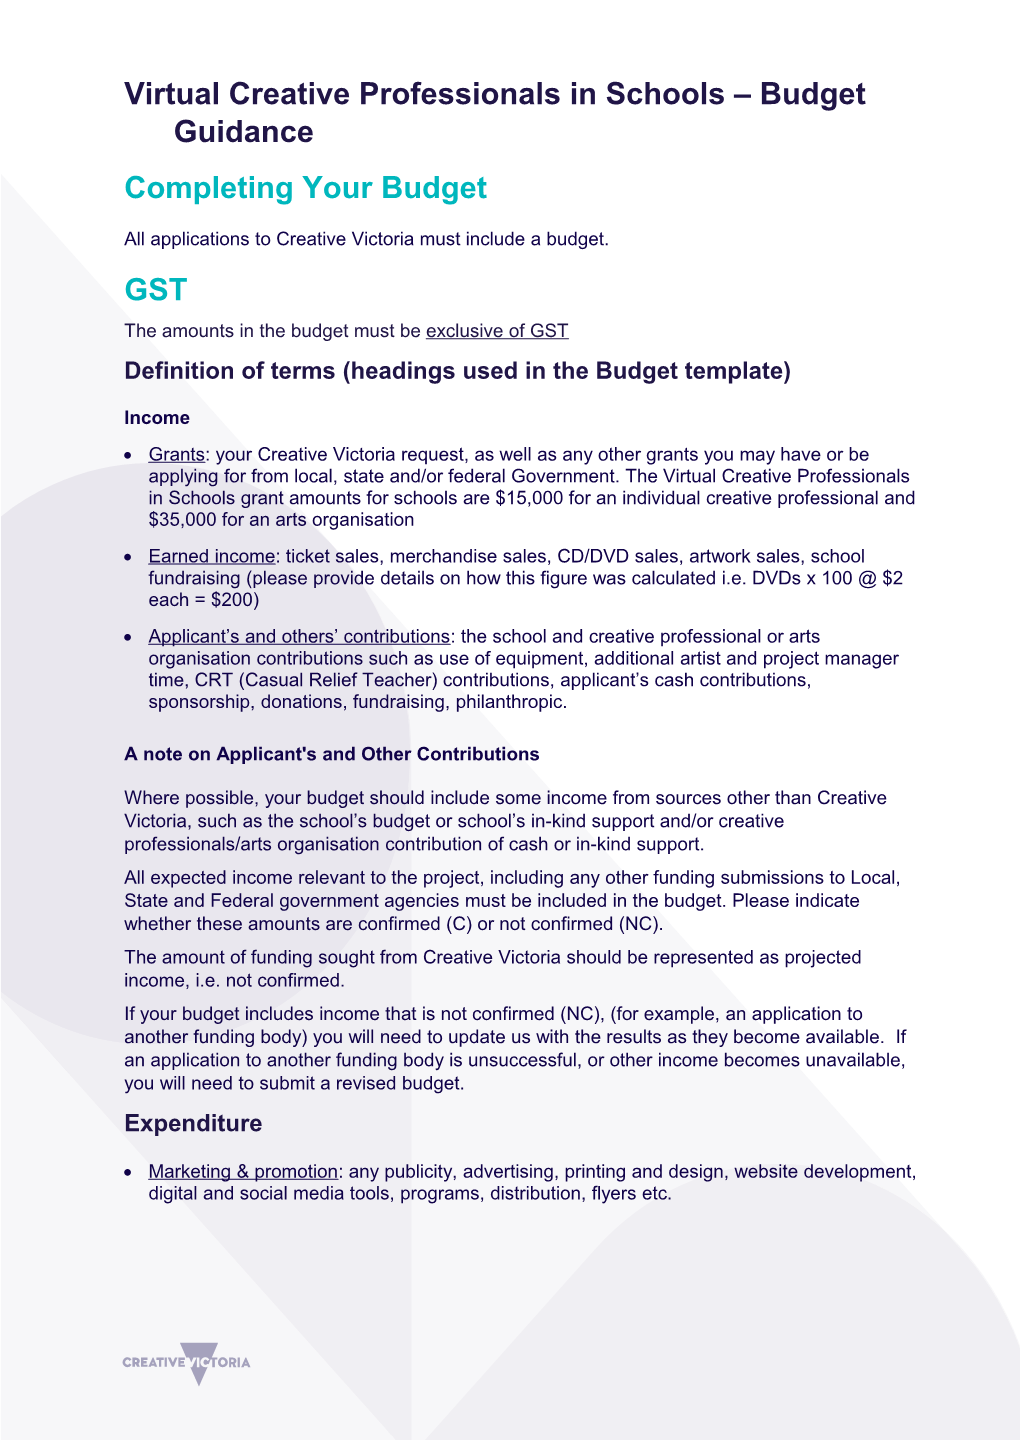 Virtual Creative Professionals in Schools Budget Guidance